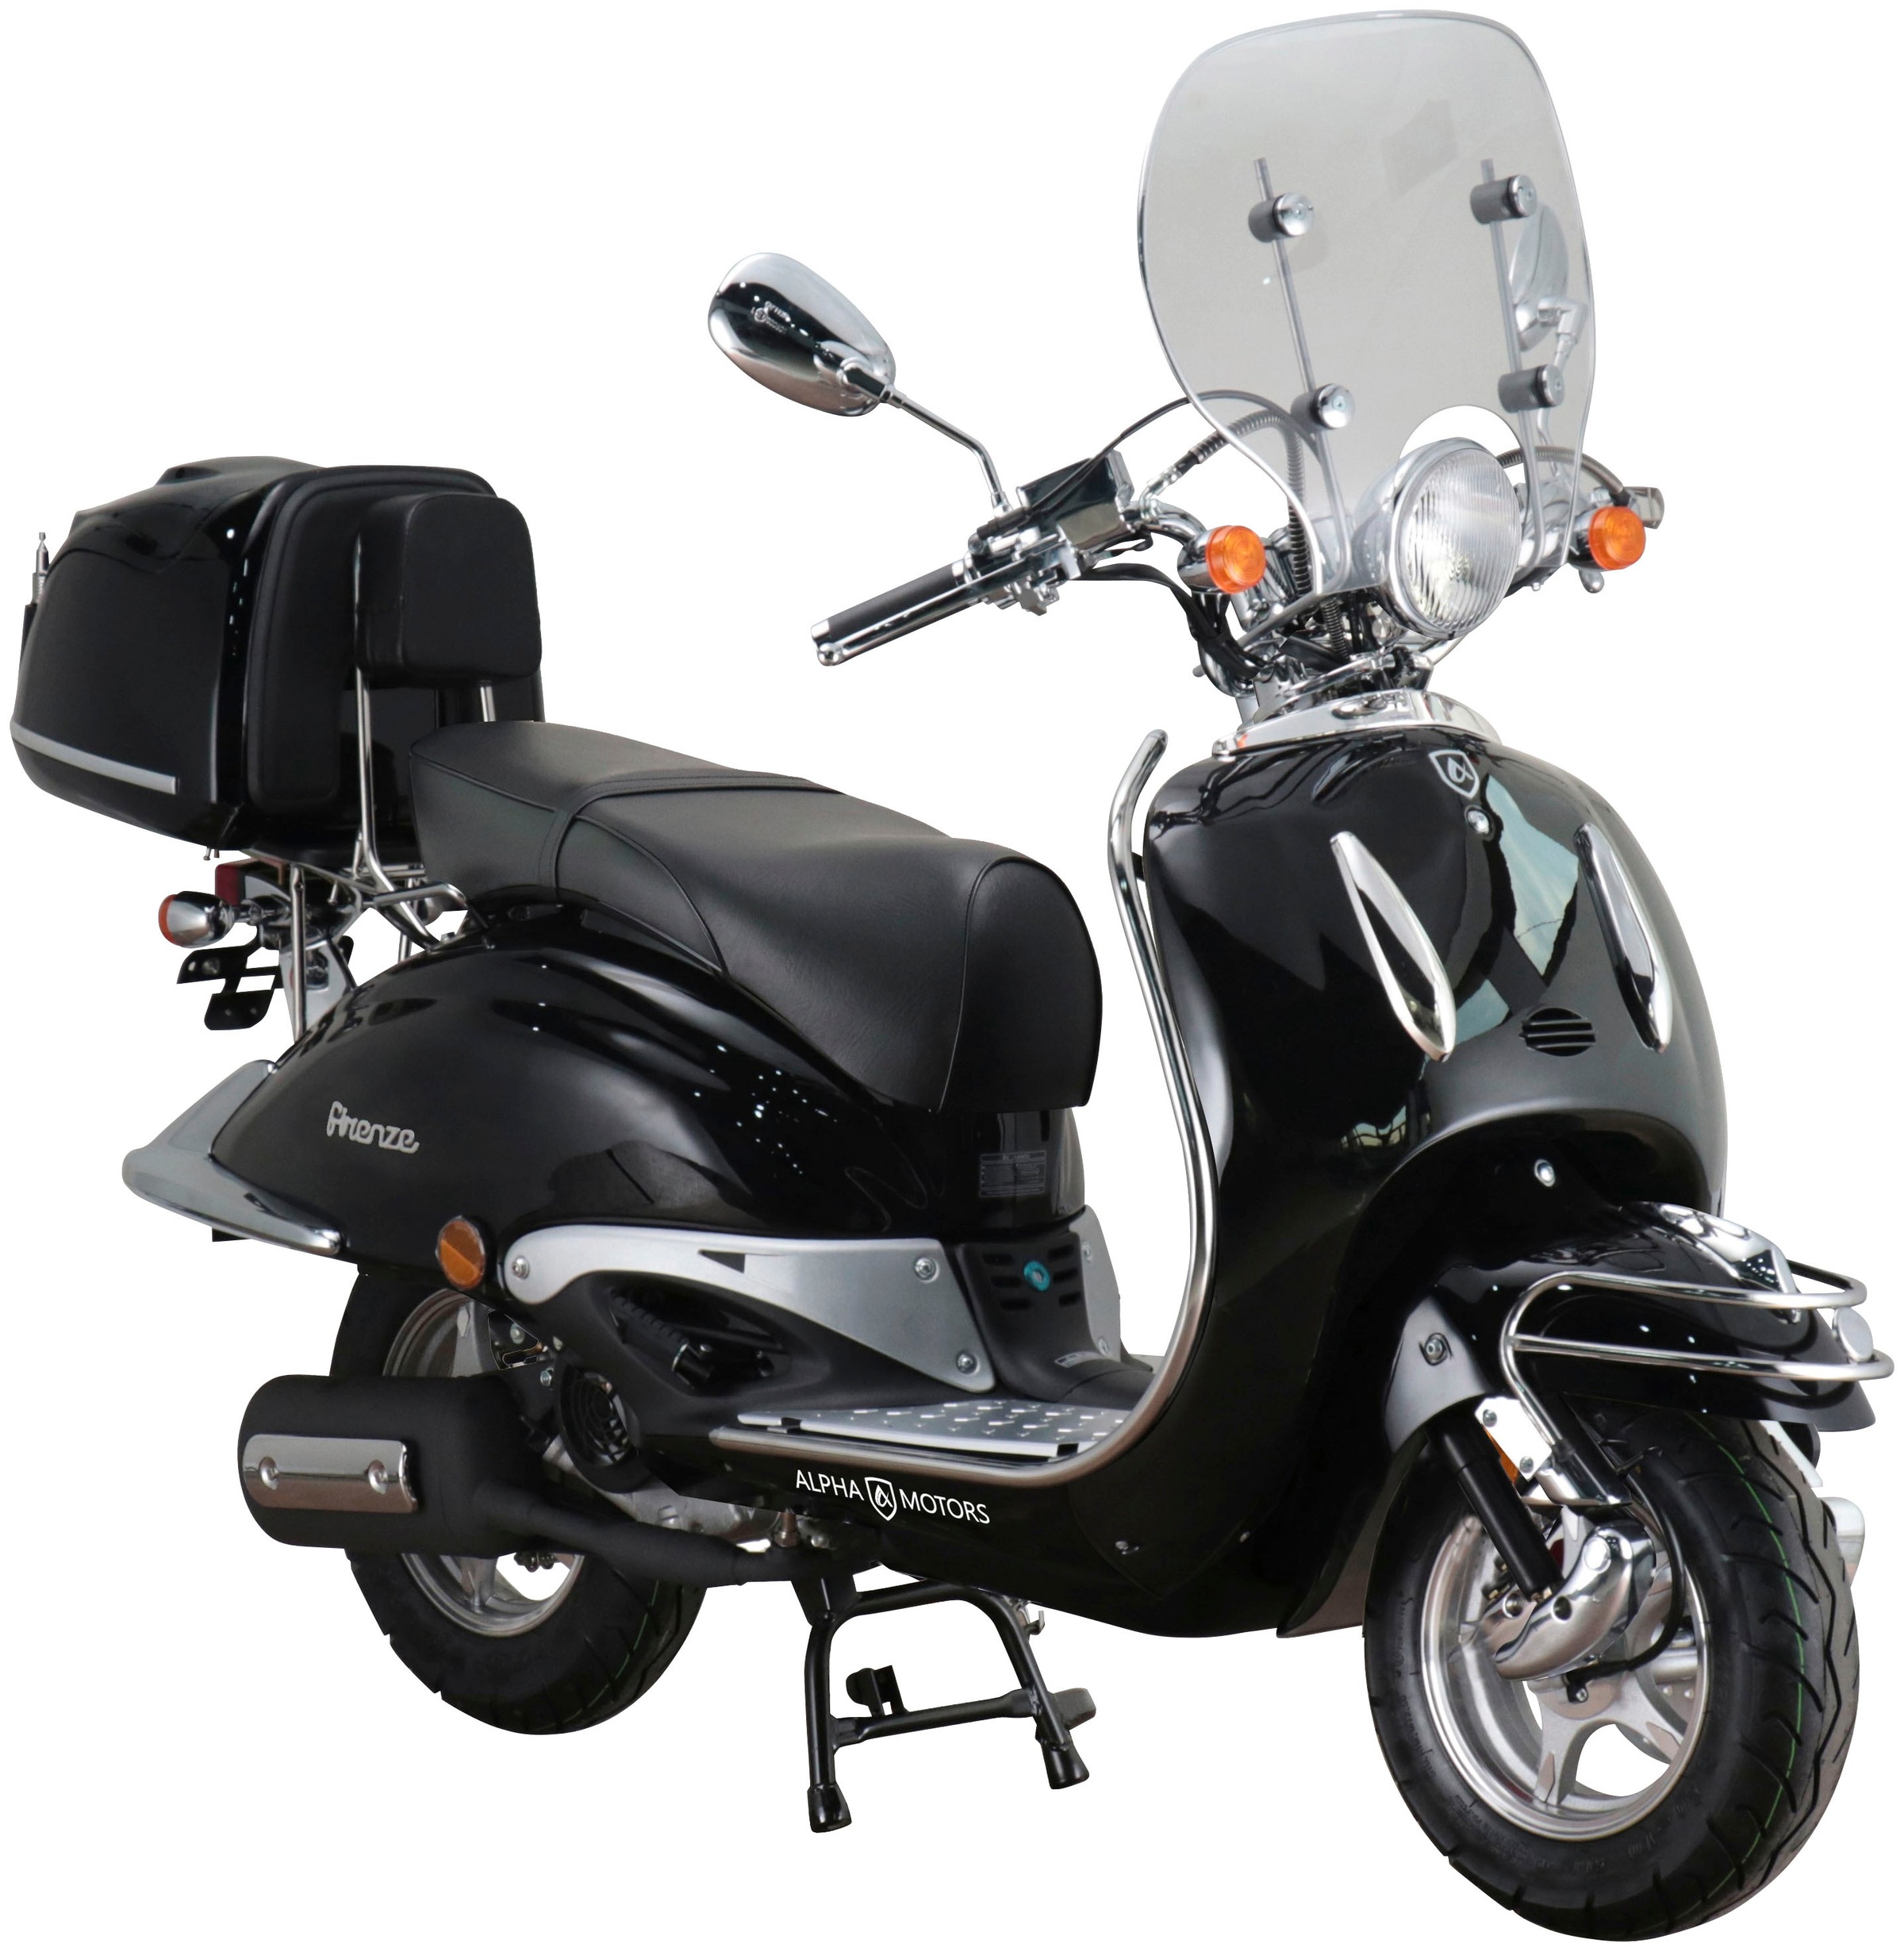 Alpha Motors Motorroller »Retro Firenze Limited«, 125 cm³, 85 km/h, Euro 5, 8,6 PS, (Spar-Set)